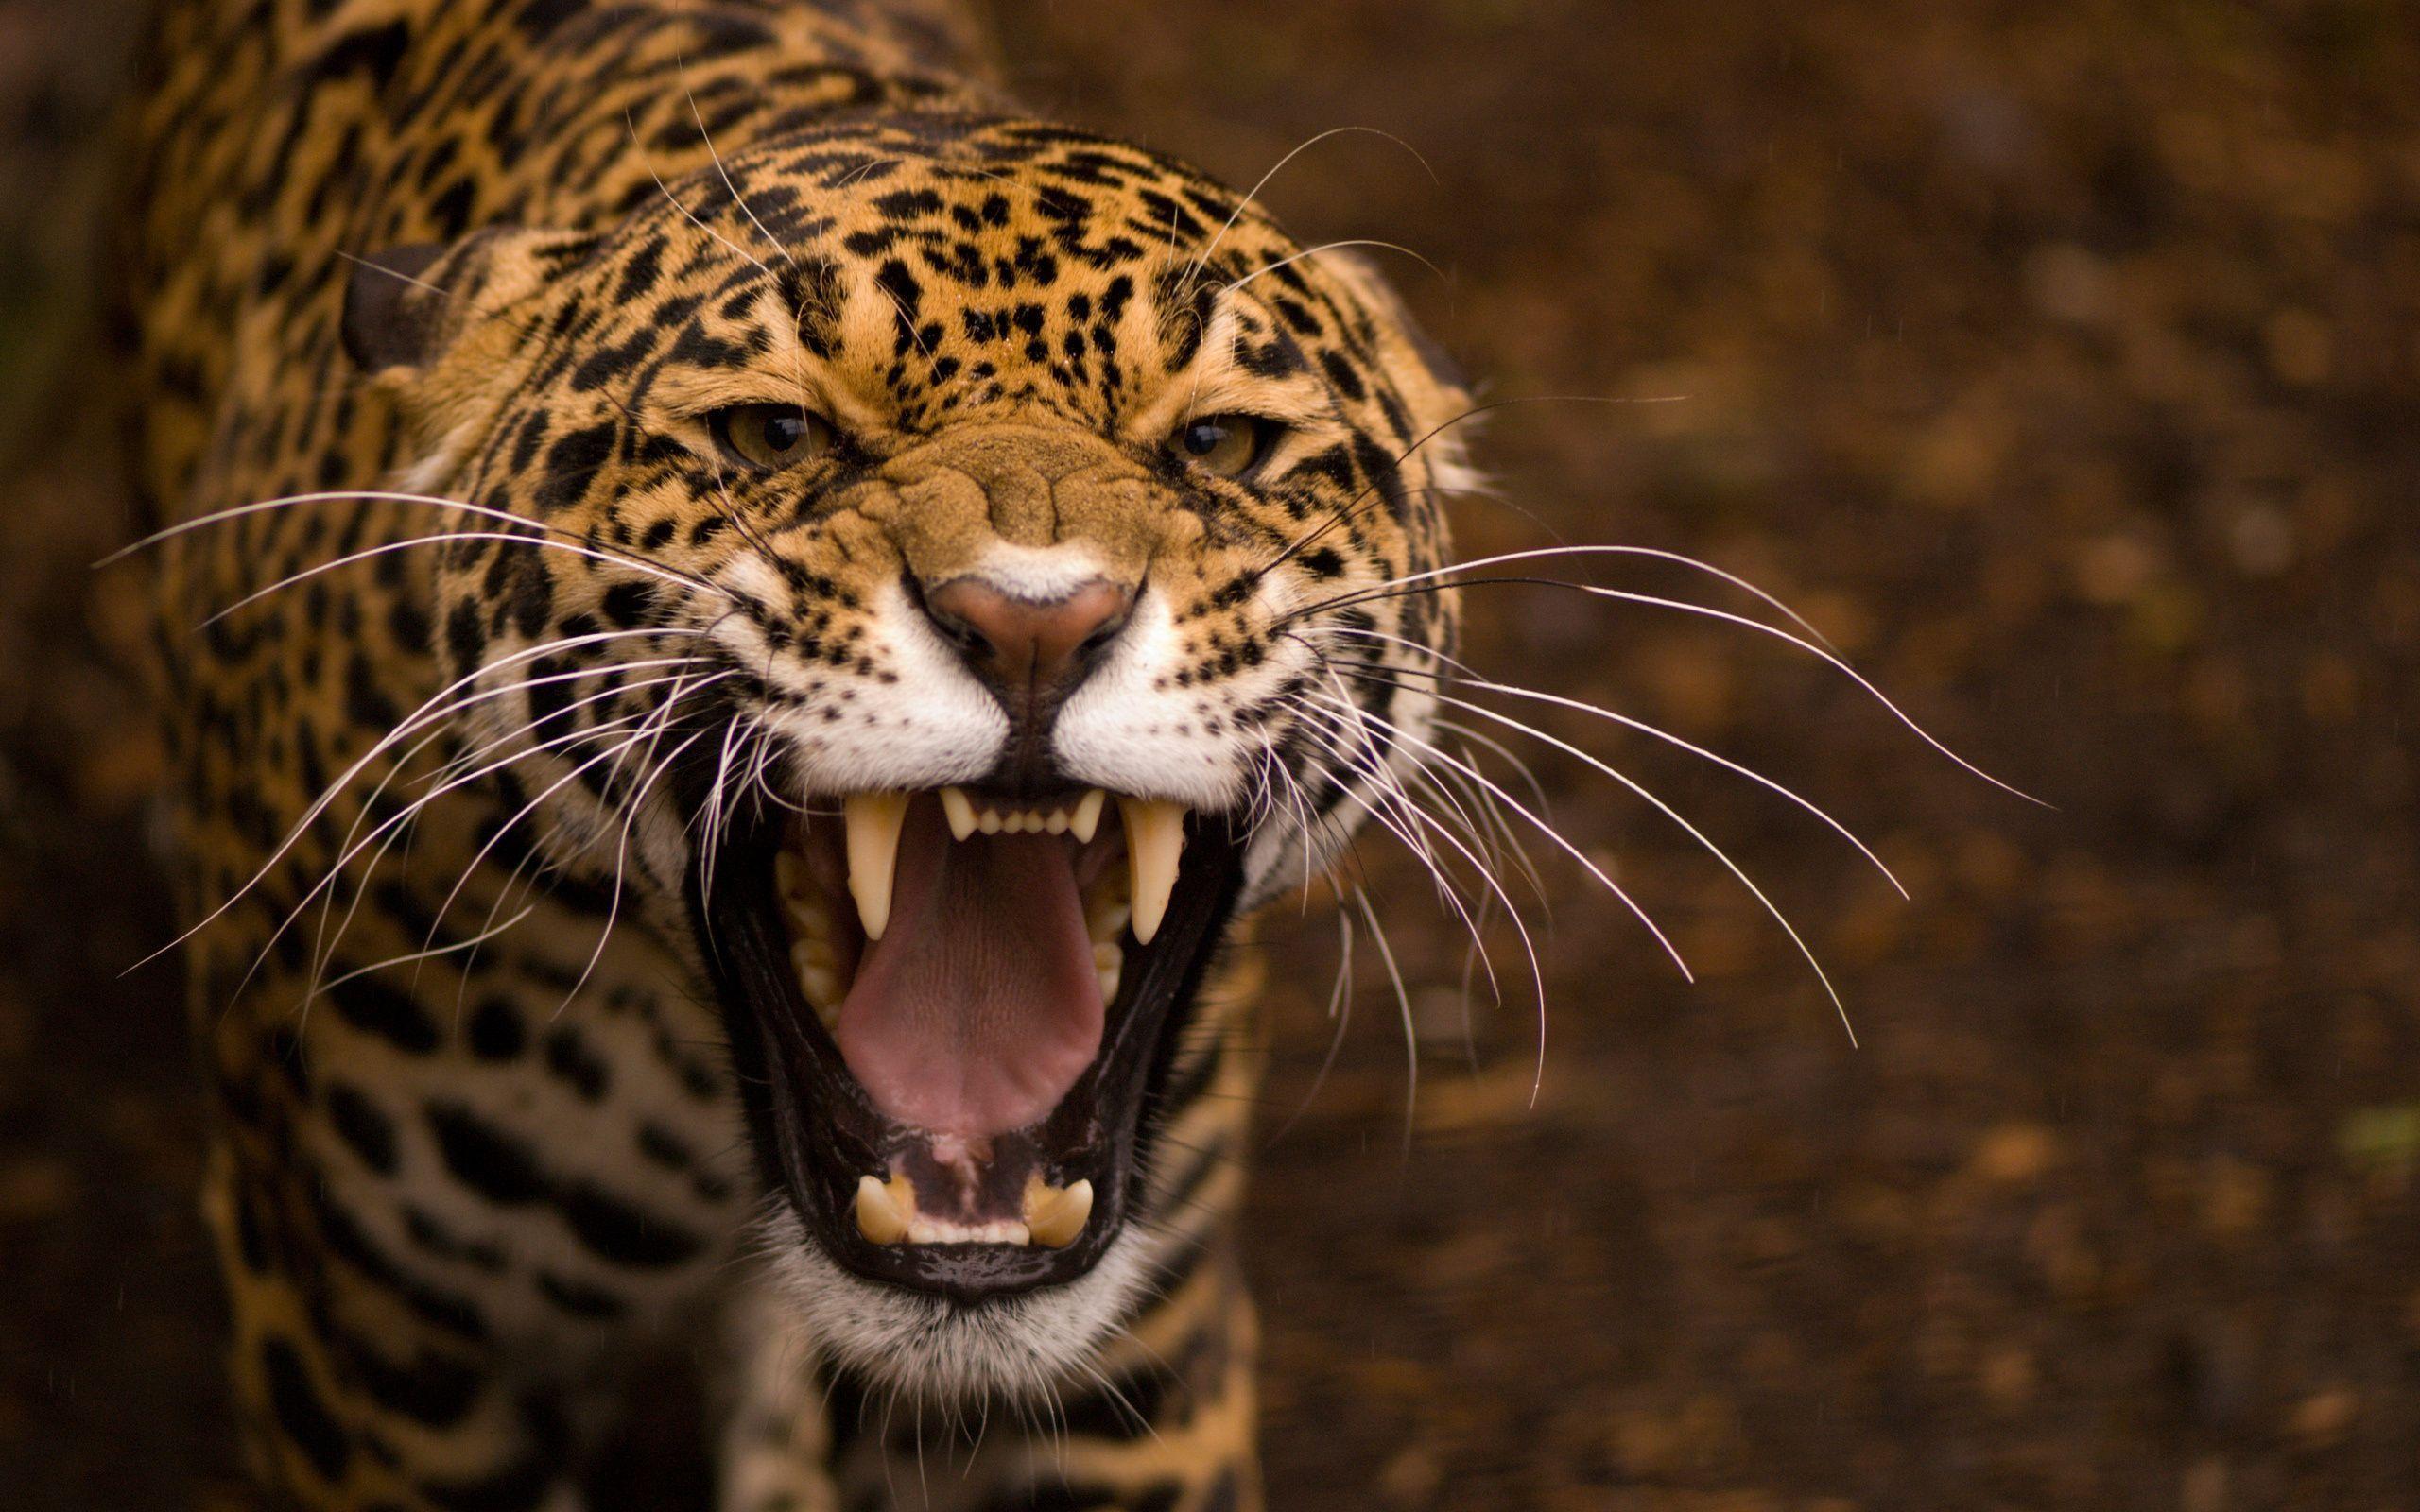 Cheetah, rage, strength Wallpaper download 2560x1600 pixel